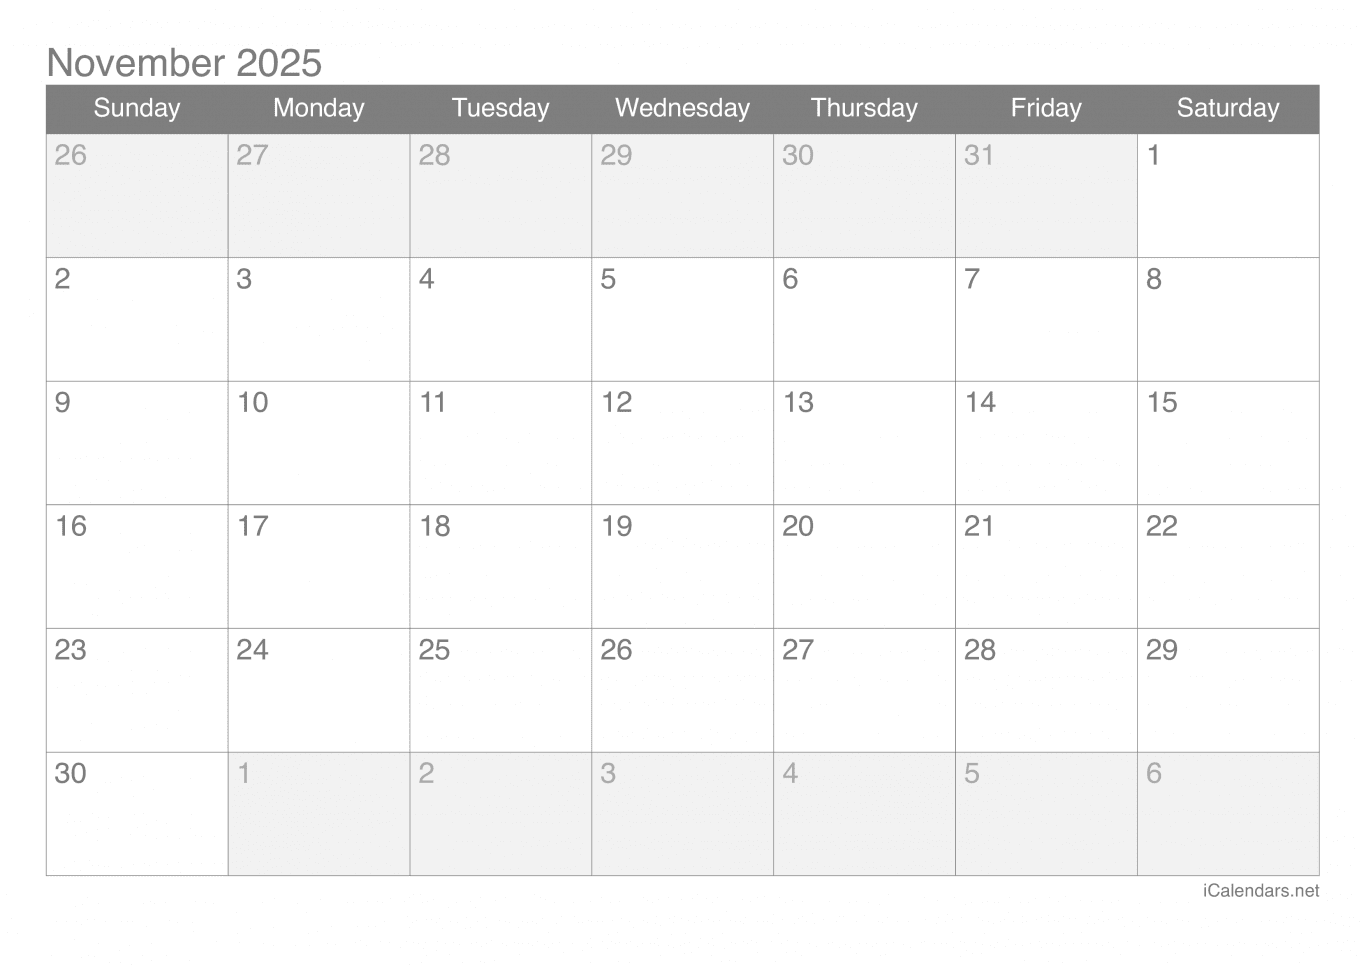 2025 November Calendar